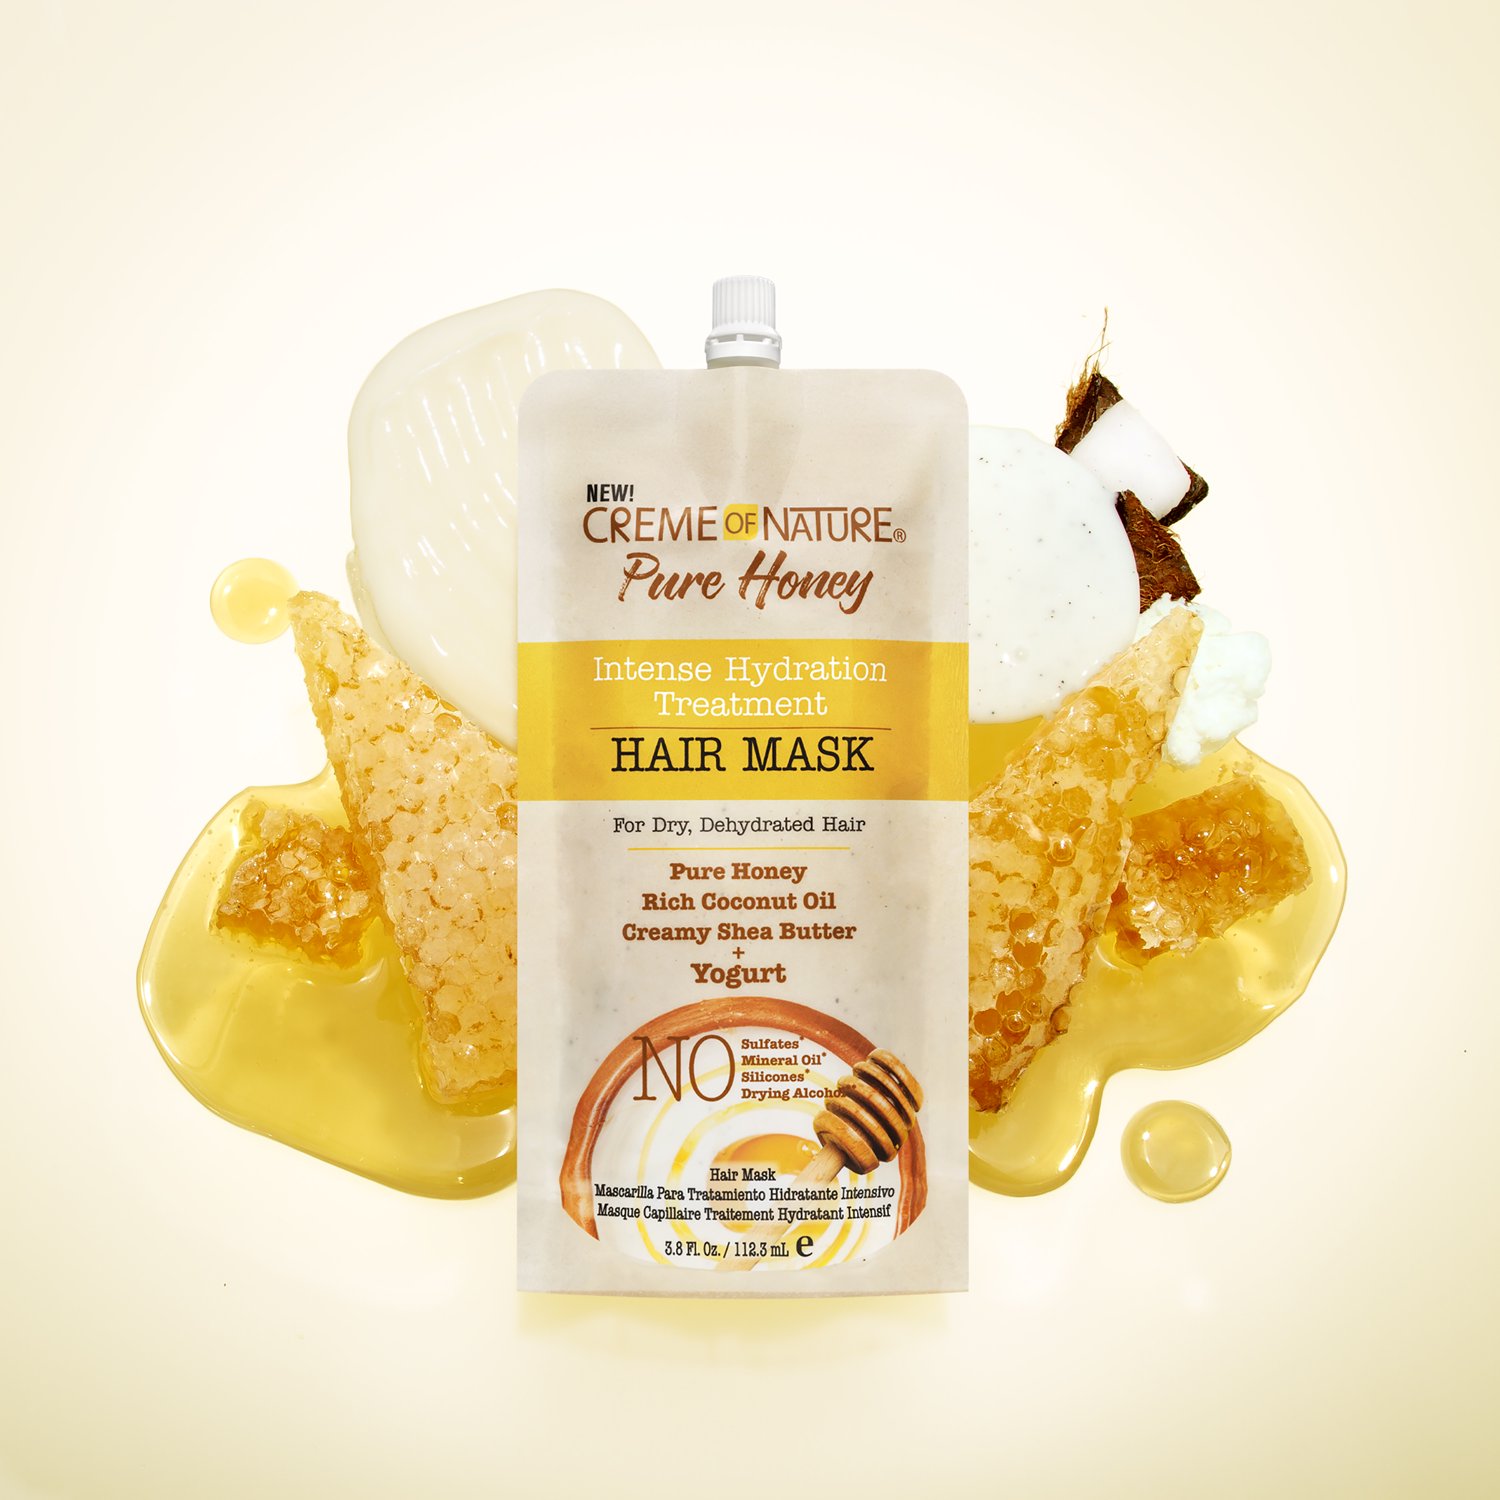 Creme of Nature Pure Honey Intense Hydration Treatment Hair Mask, 3.4 oz - image 4 of 8